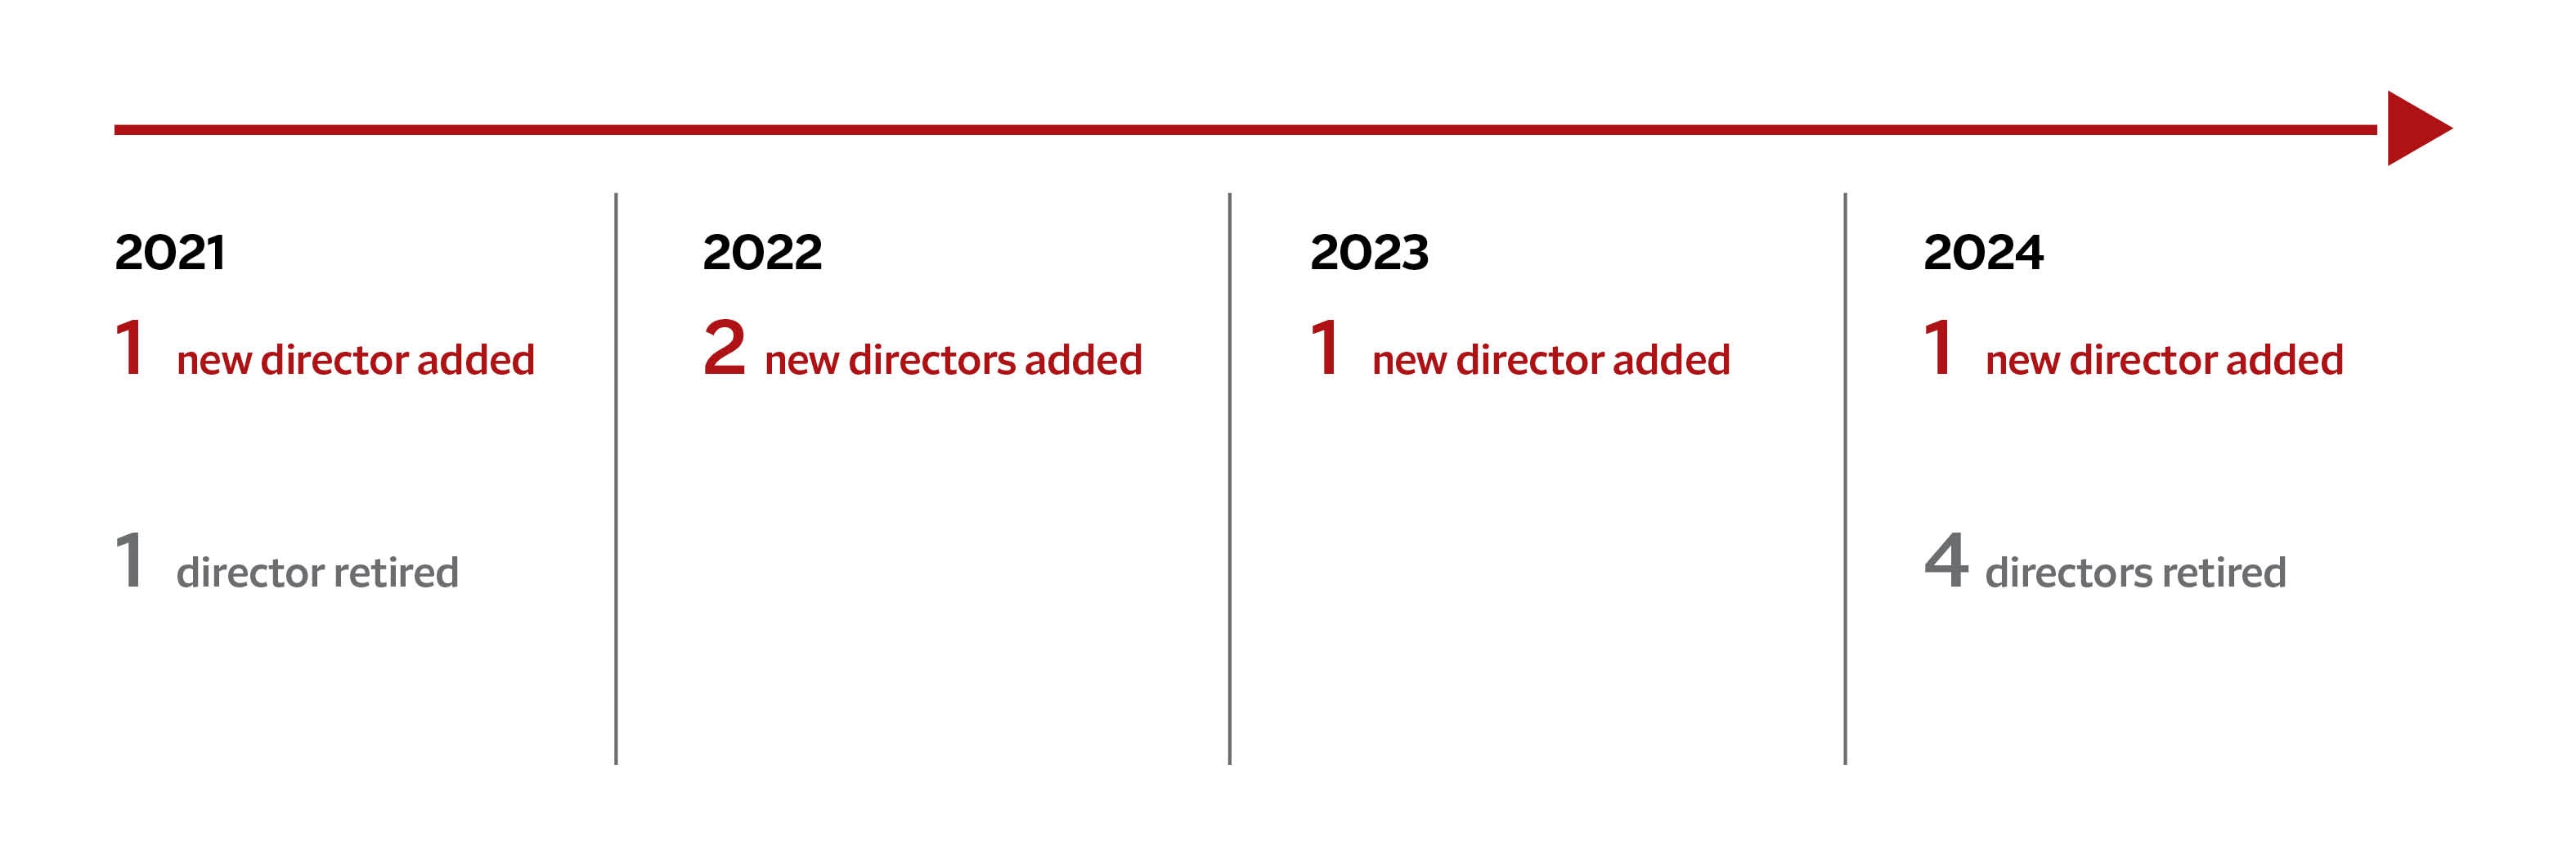 Recent Board Refreshment graphic. 2021: 1 new director added; 1 director retired. 2022: 2 new directors added. 2023: 1 new director added. 2024: 1 new director added; 4 directors retired.